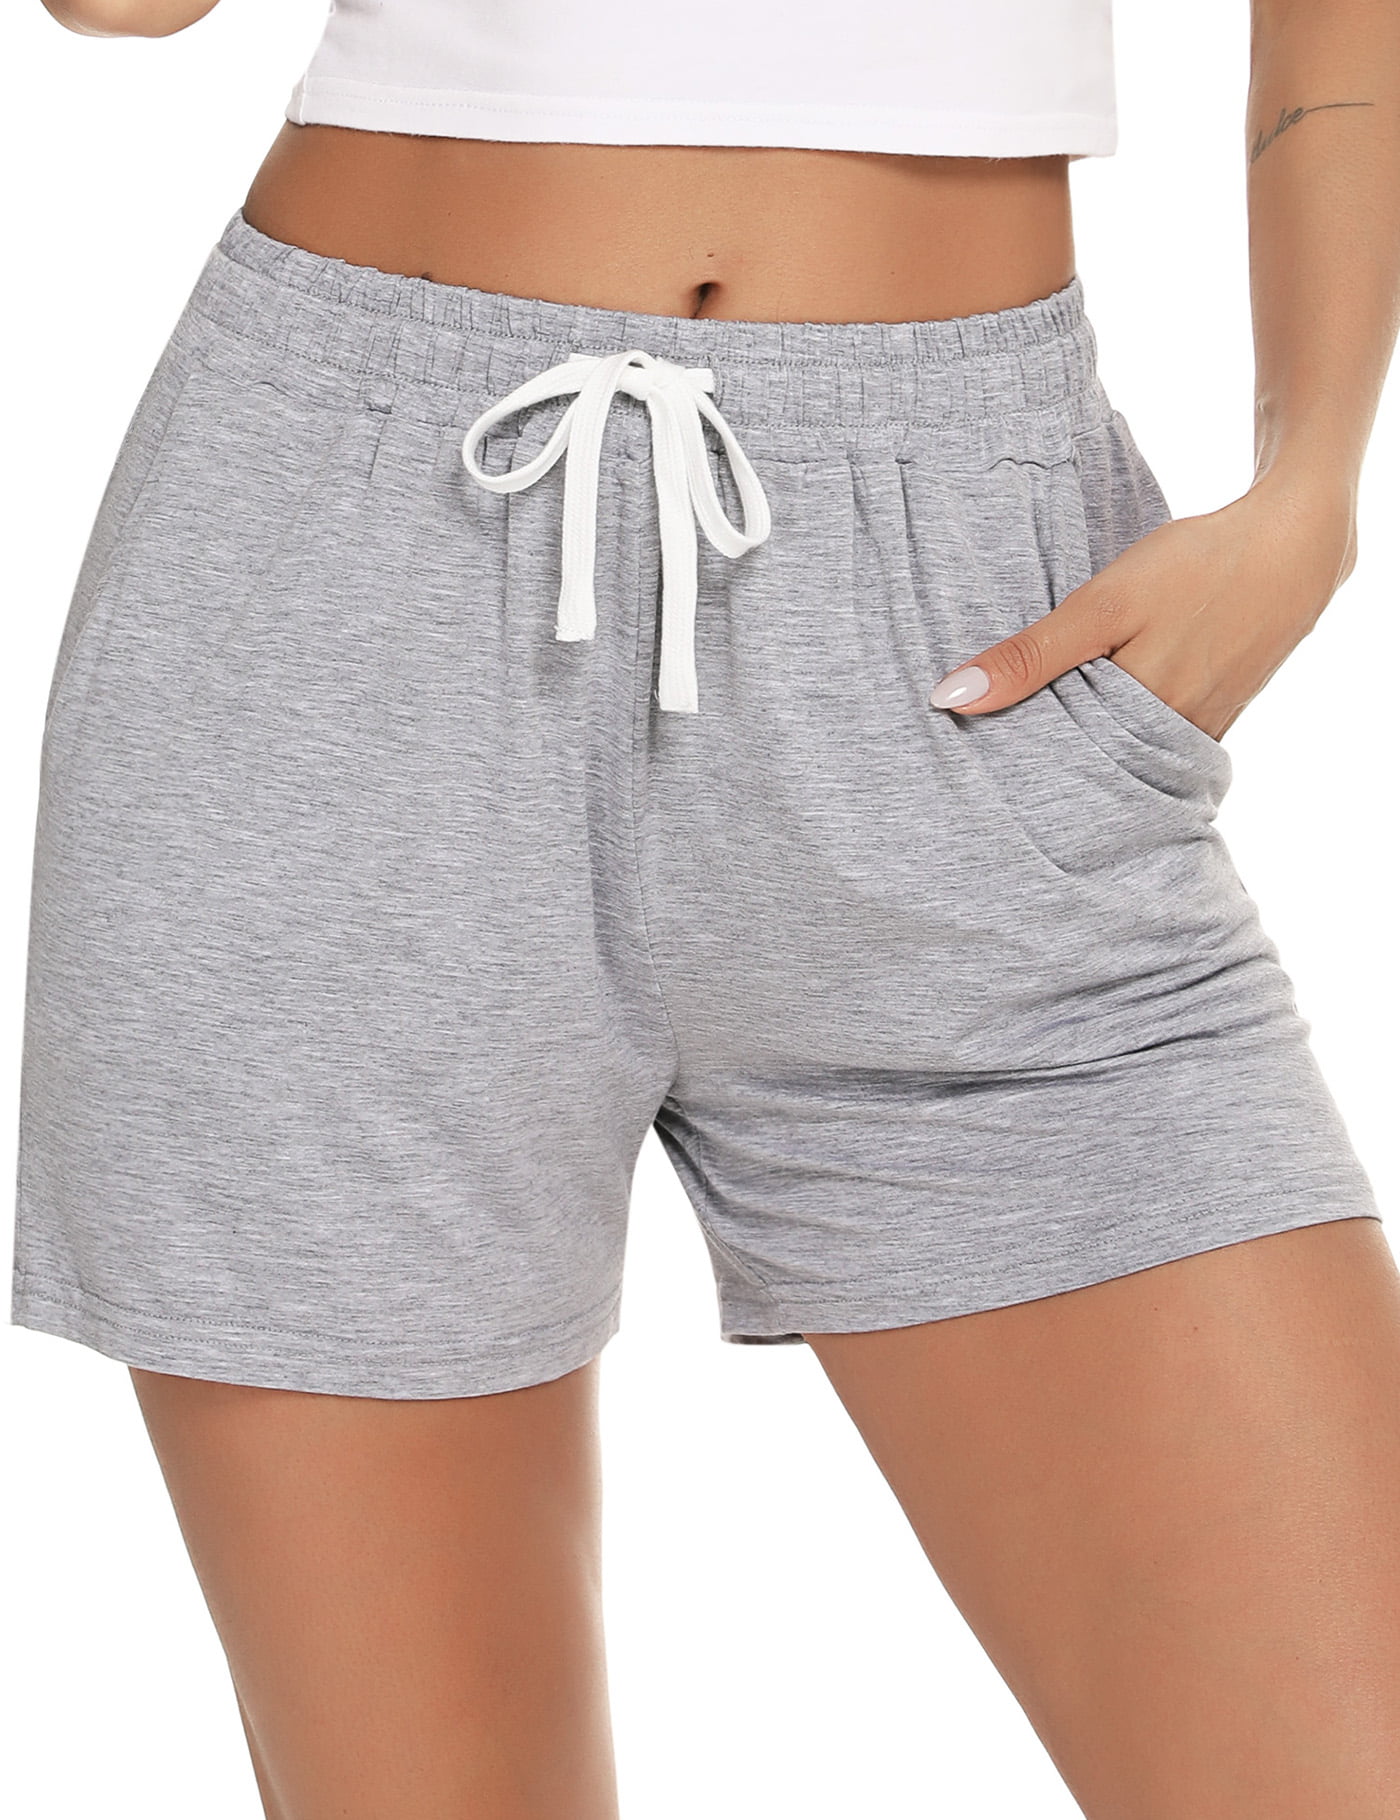 iClosam Women Sport Shorts Pyjama Bottoms Lounge Shorts Sleep Shorts Cotton Pajama Shorts Cotton Trousers for Yoga Sports Gym S-XXL 